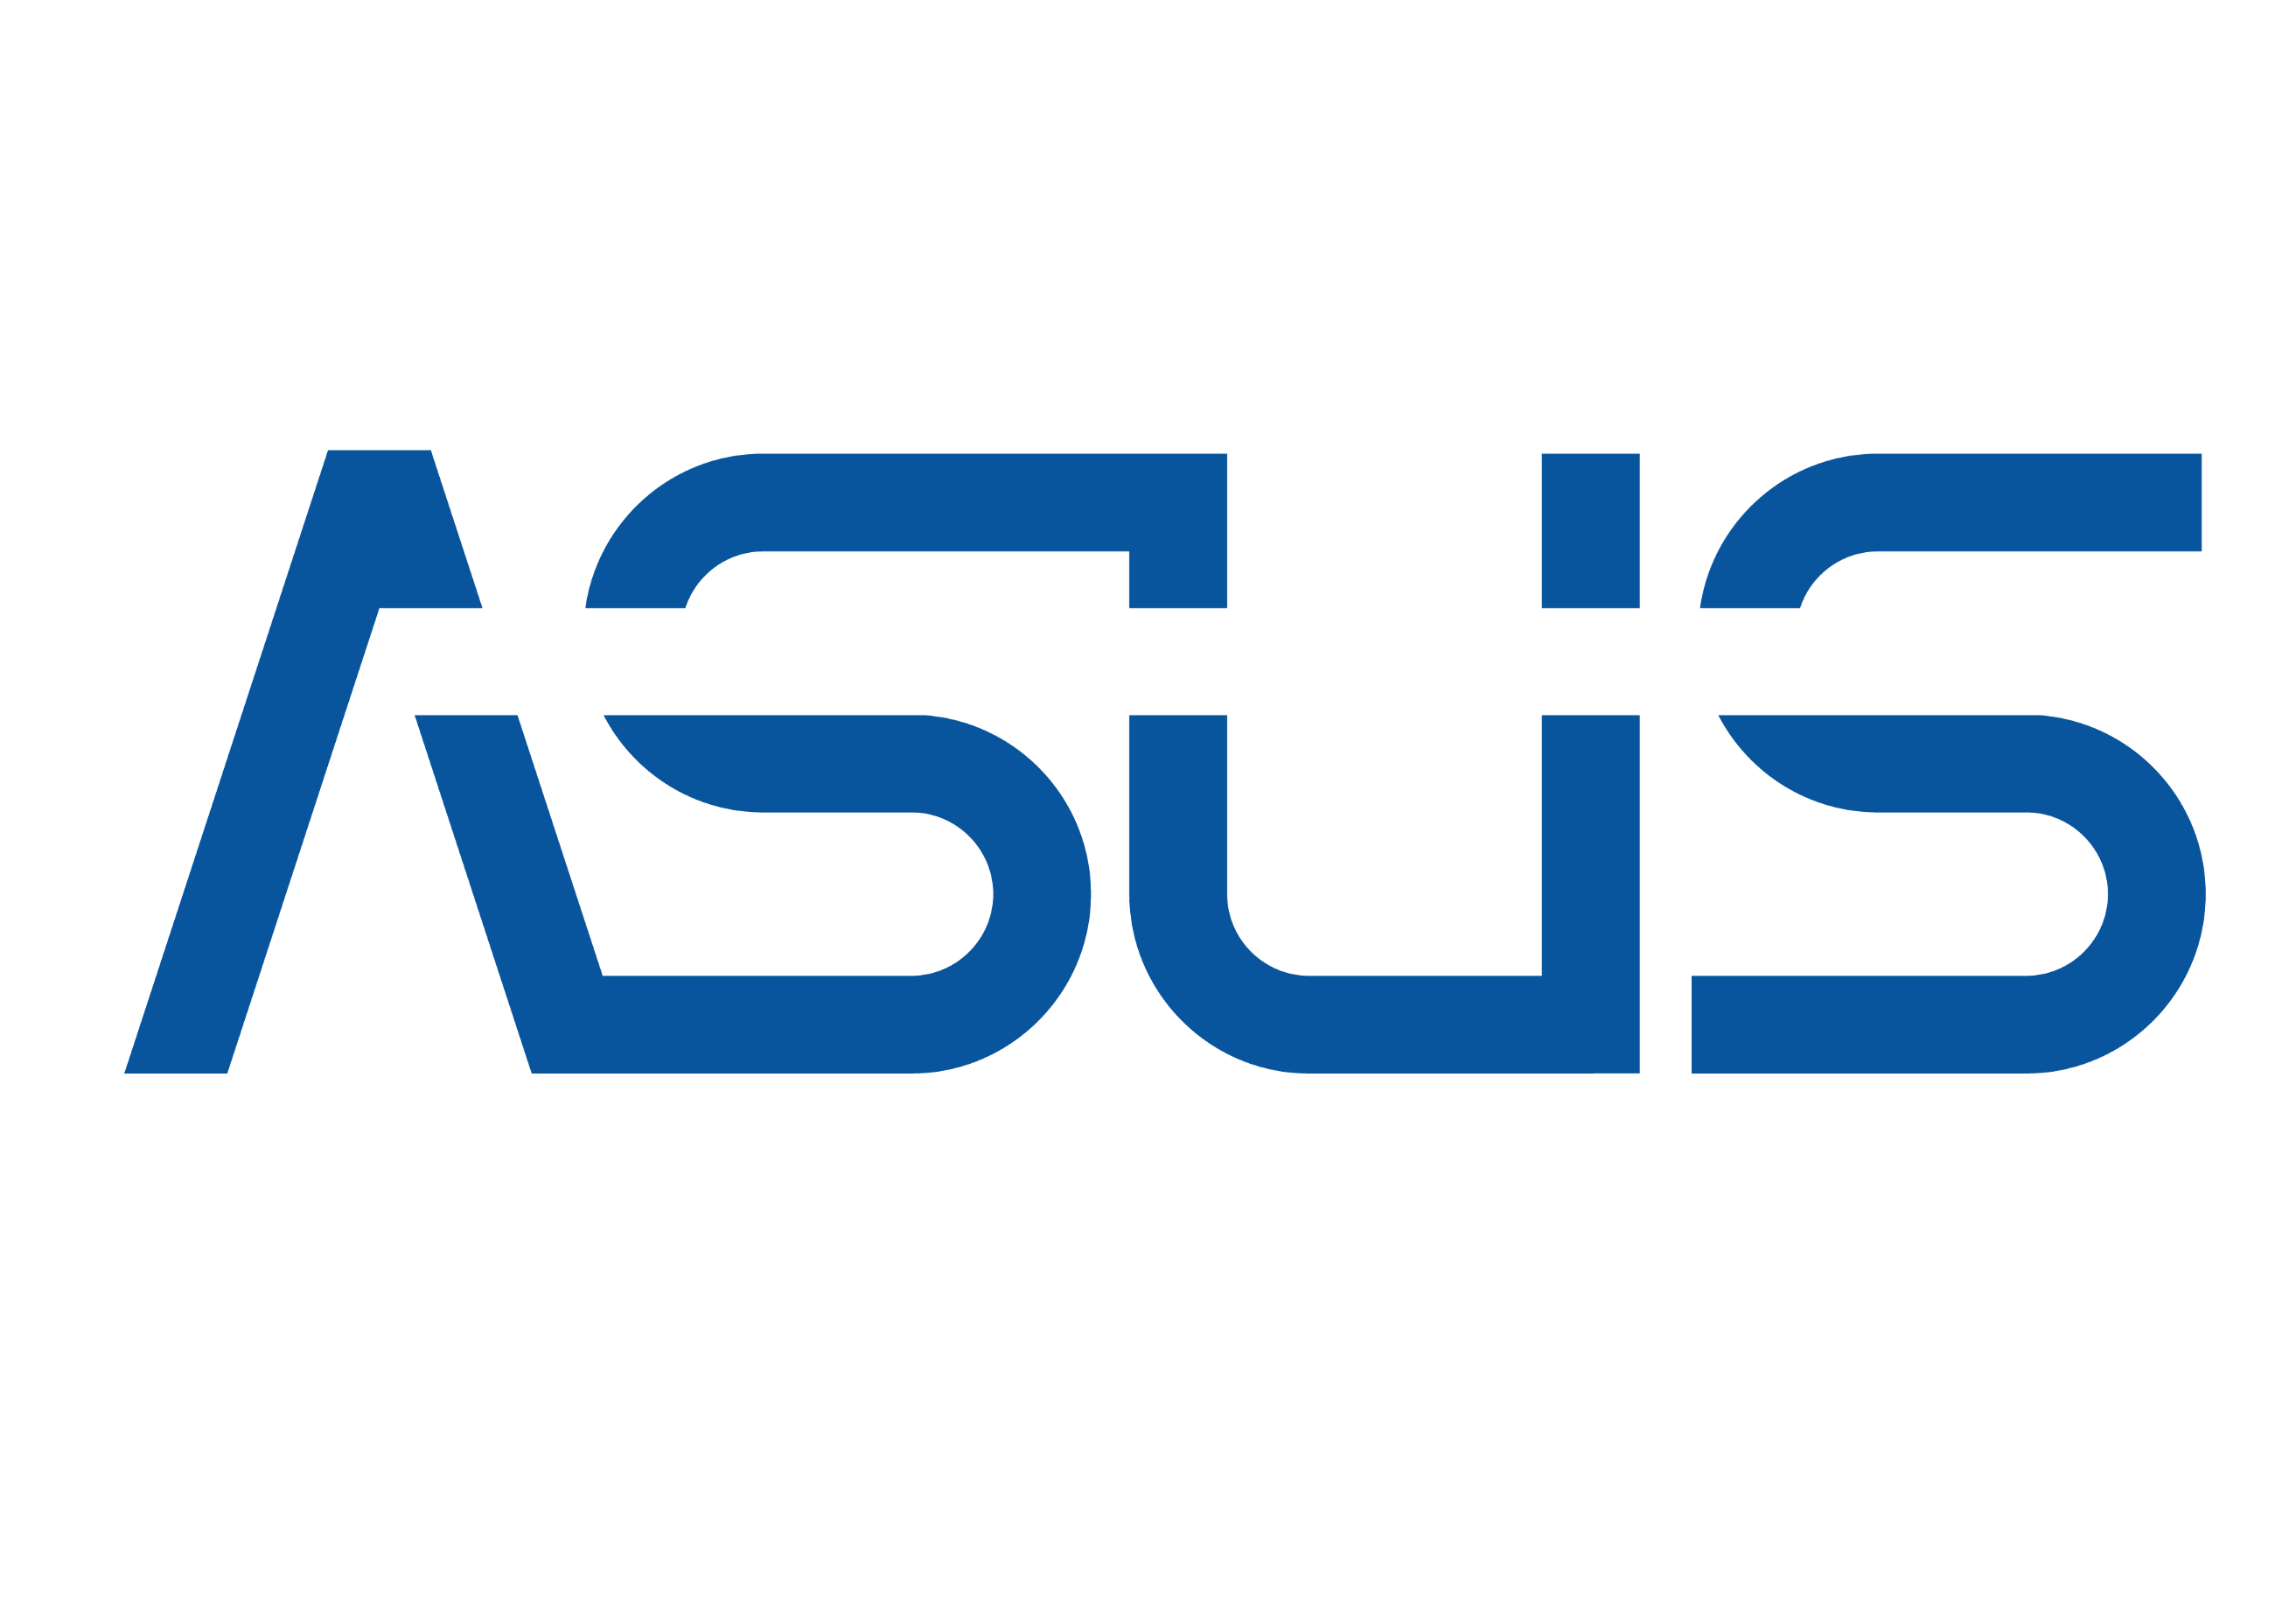 Few Logo - Fixing the ASUS Logo